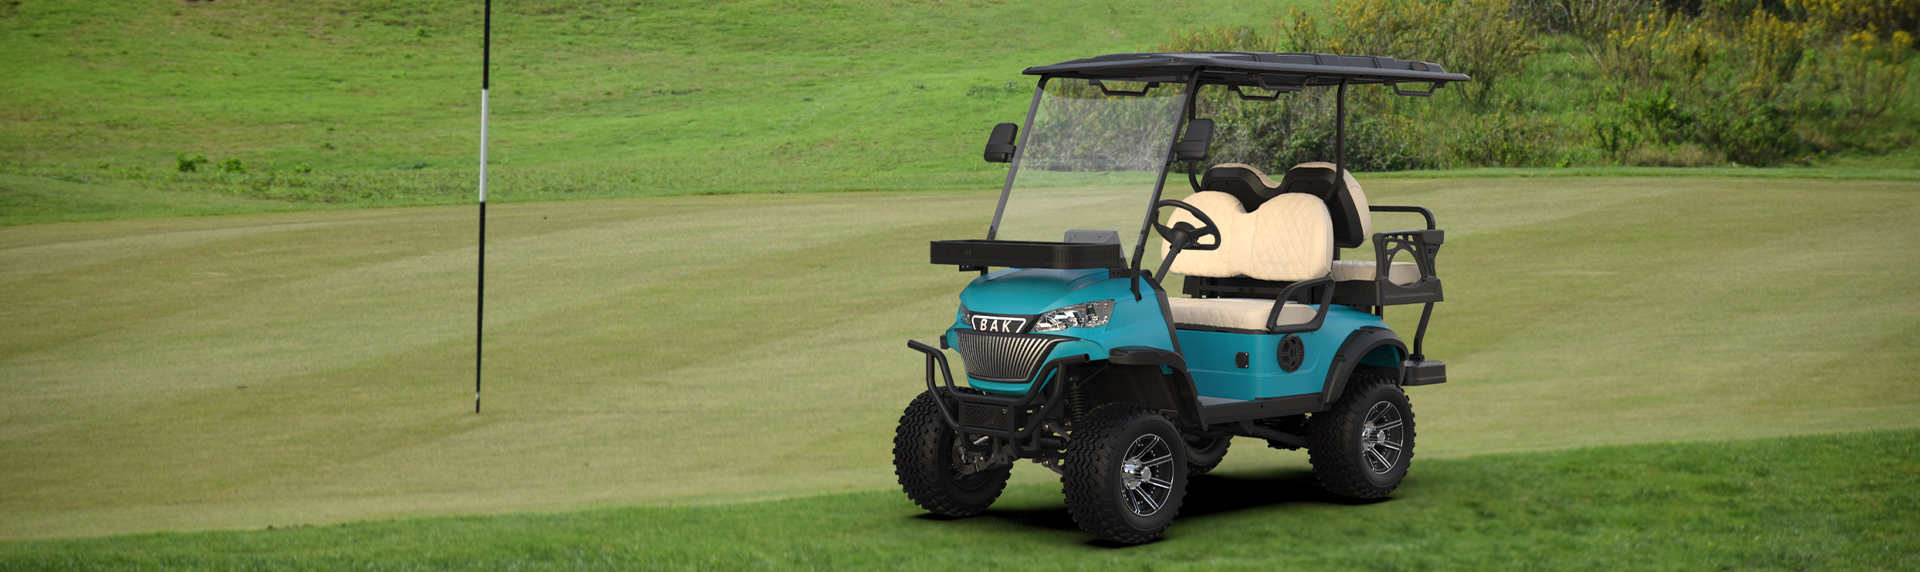 Customizable Accessory Hunter Golf Cart "K-H Serie" K-H2 With BAK 48V200AH Lithium Iron Phosphate